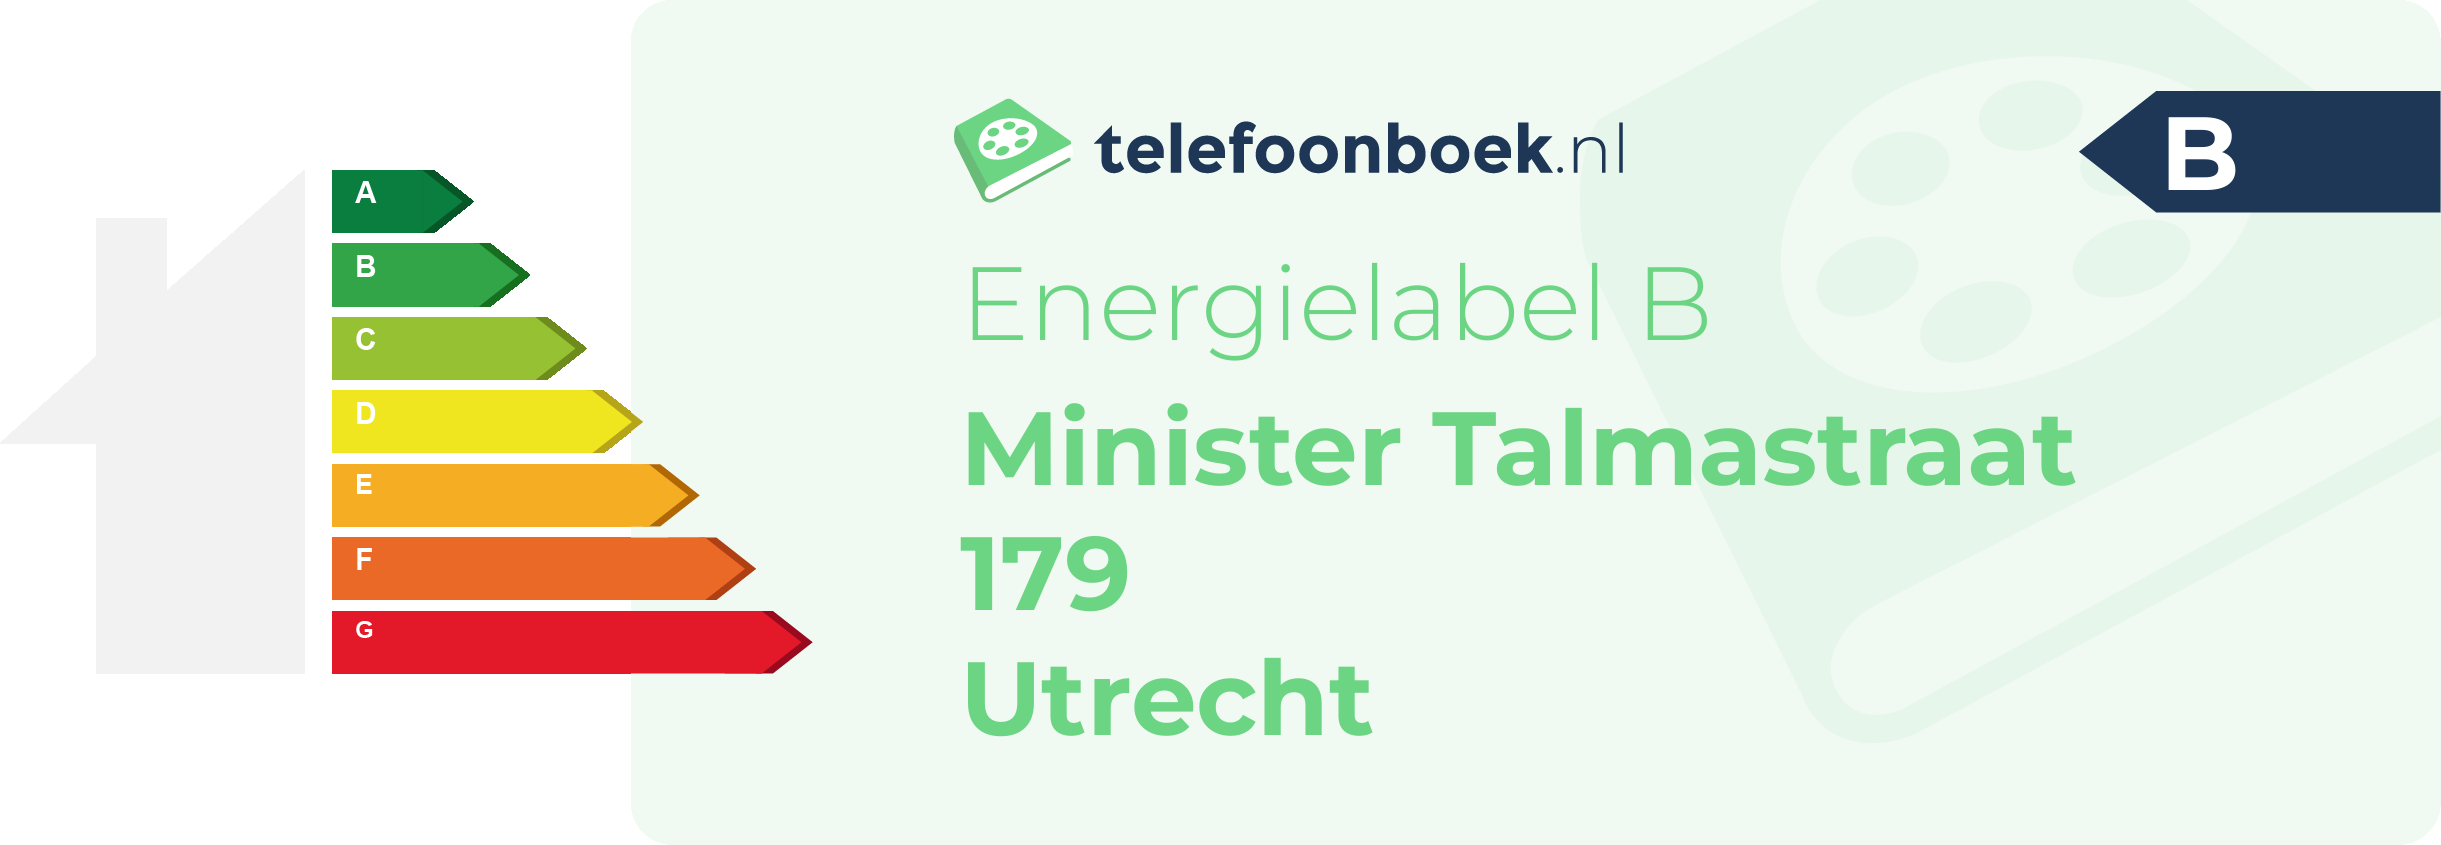 Energielabel Minister Talmastraat 179 Utrecht